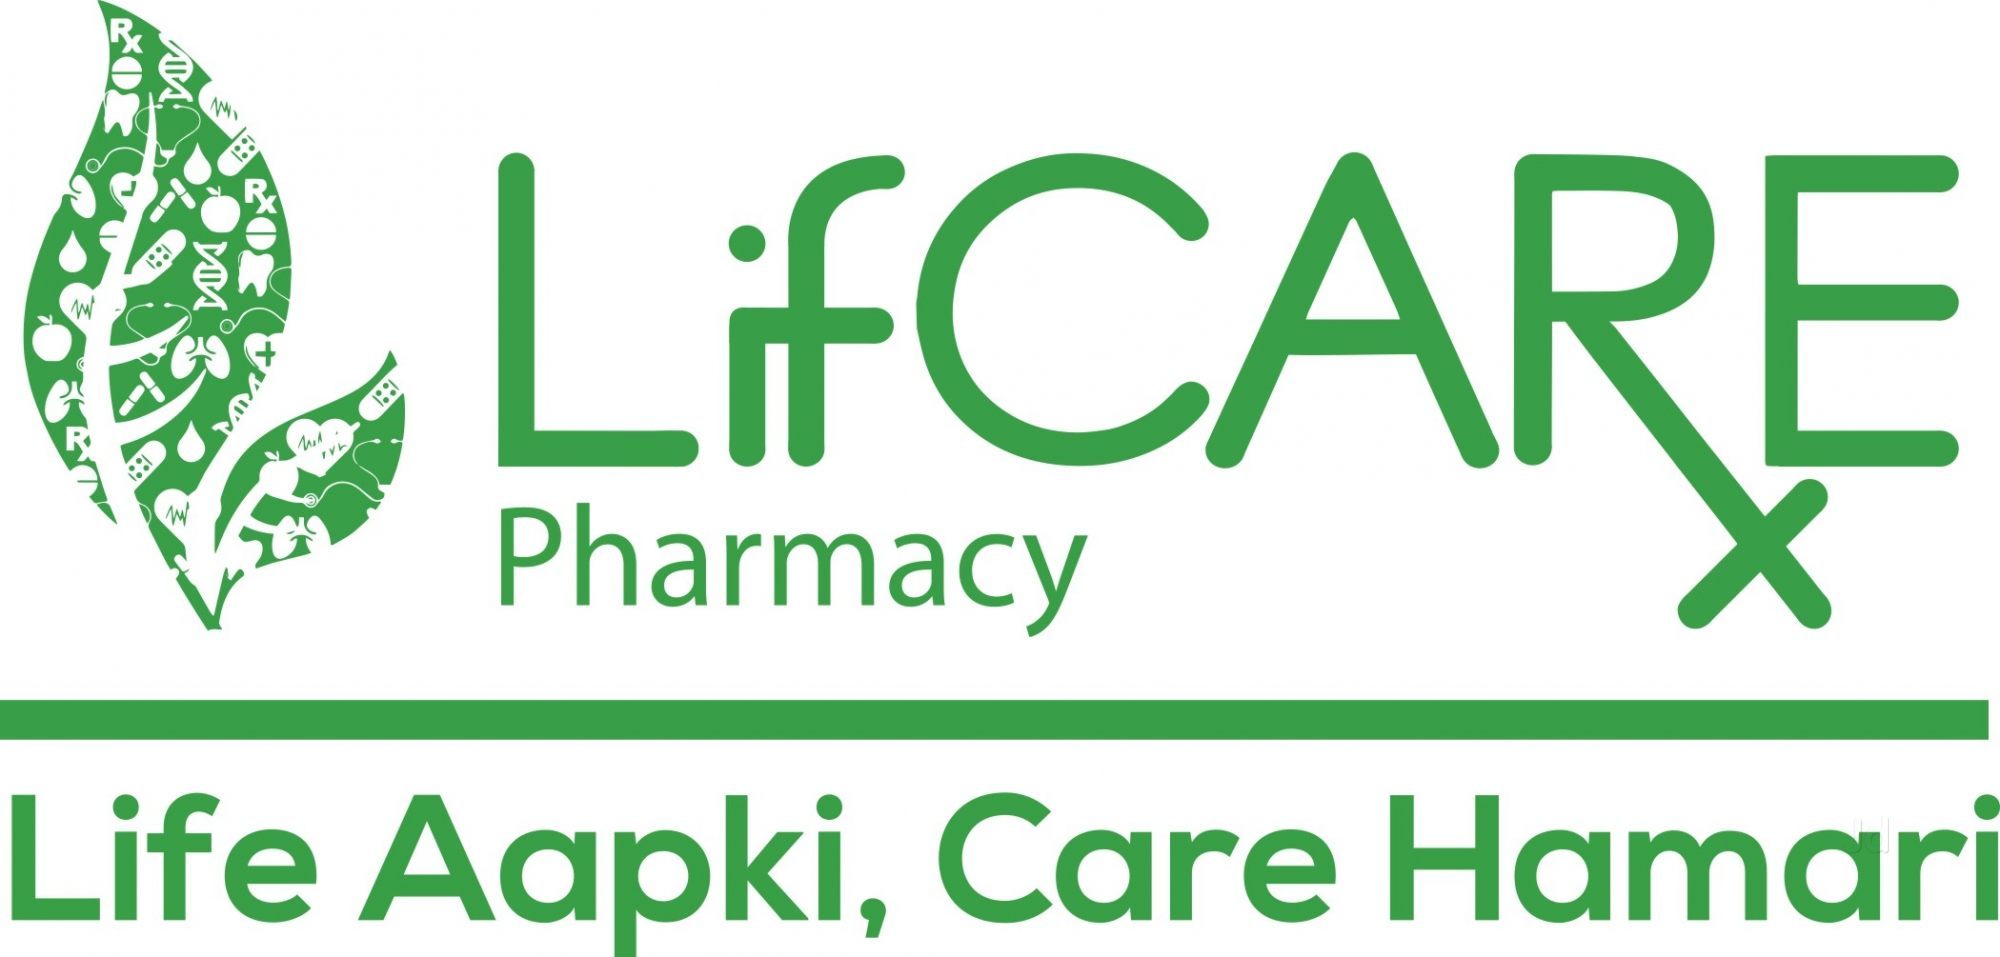 Subscription Pharmacy LifCare raises ₹75.8 crores in series B